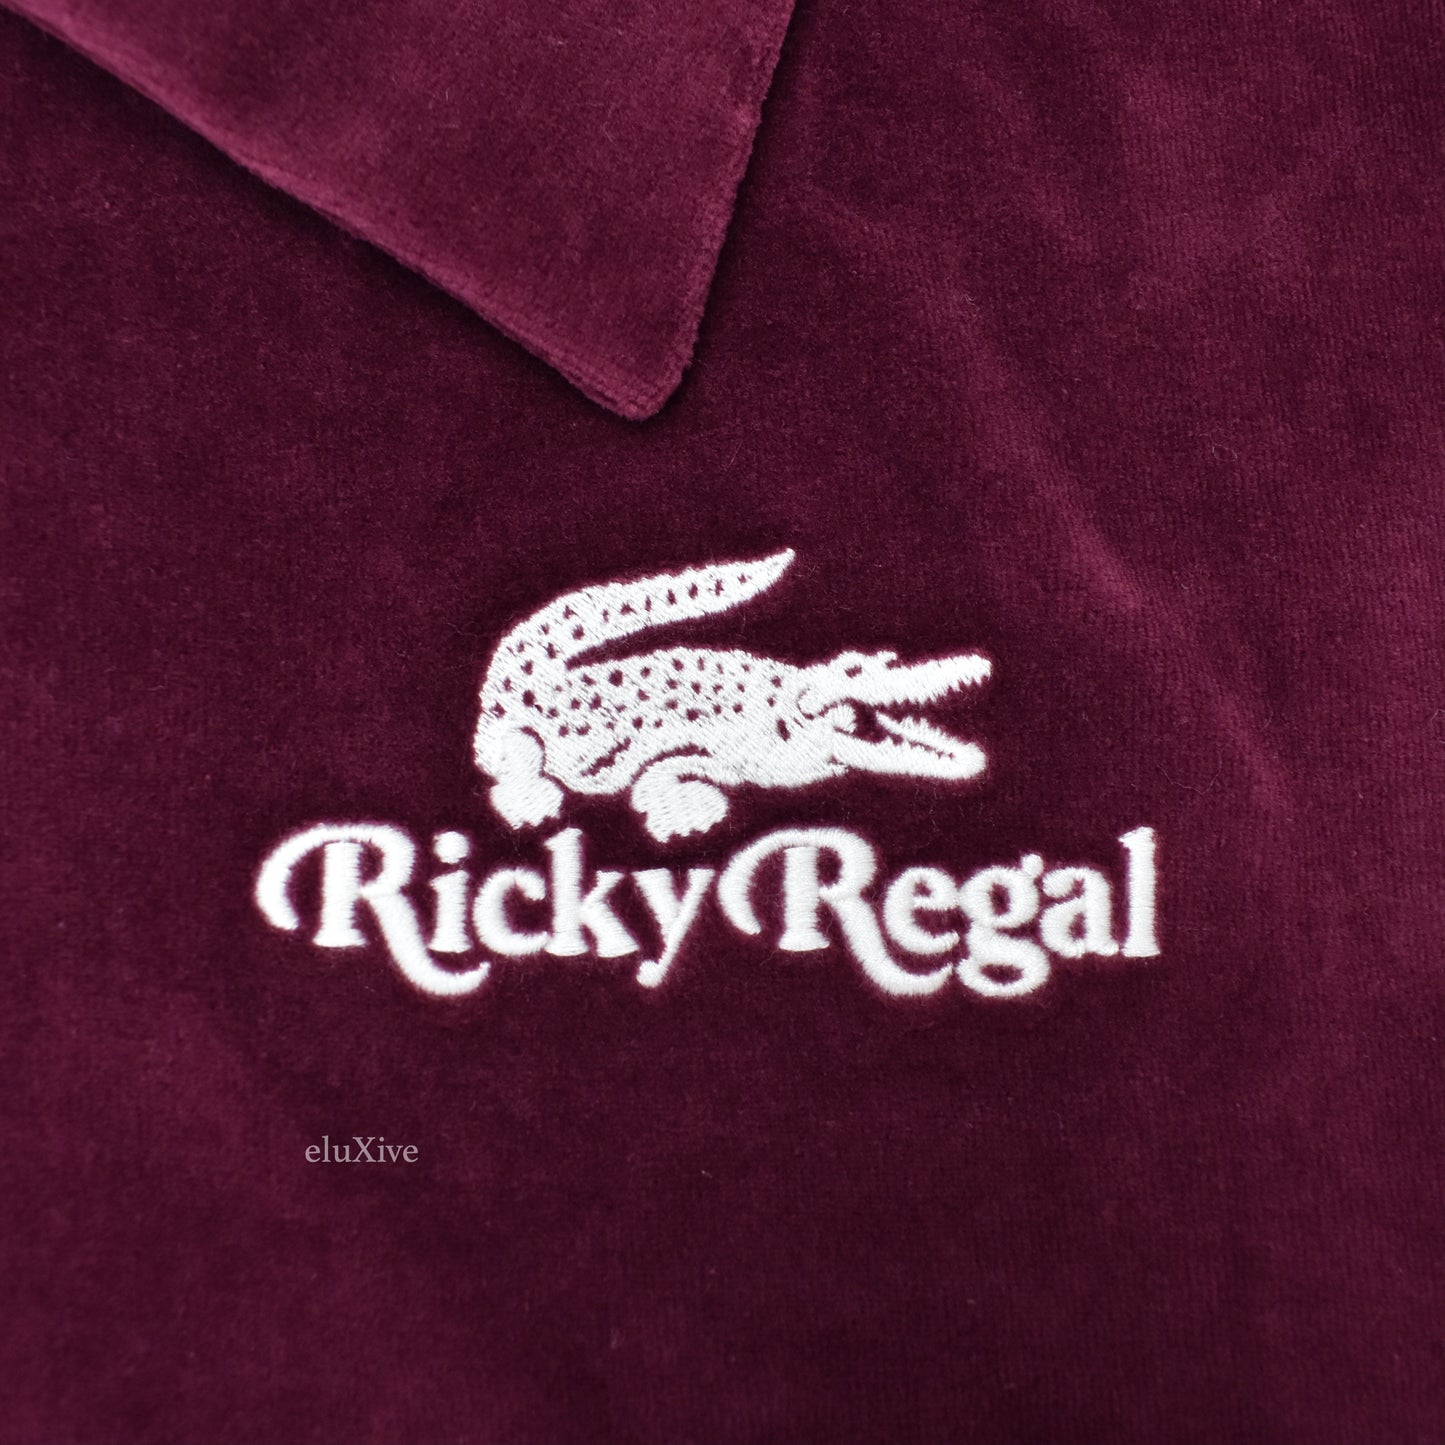 Lacoste x Bruno Mars - Ricky Regal Velour Polo Shirt (Maroon)